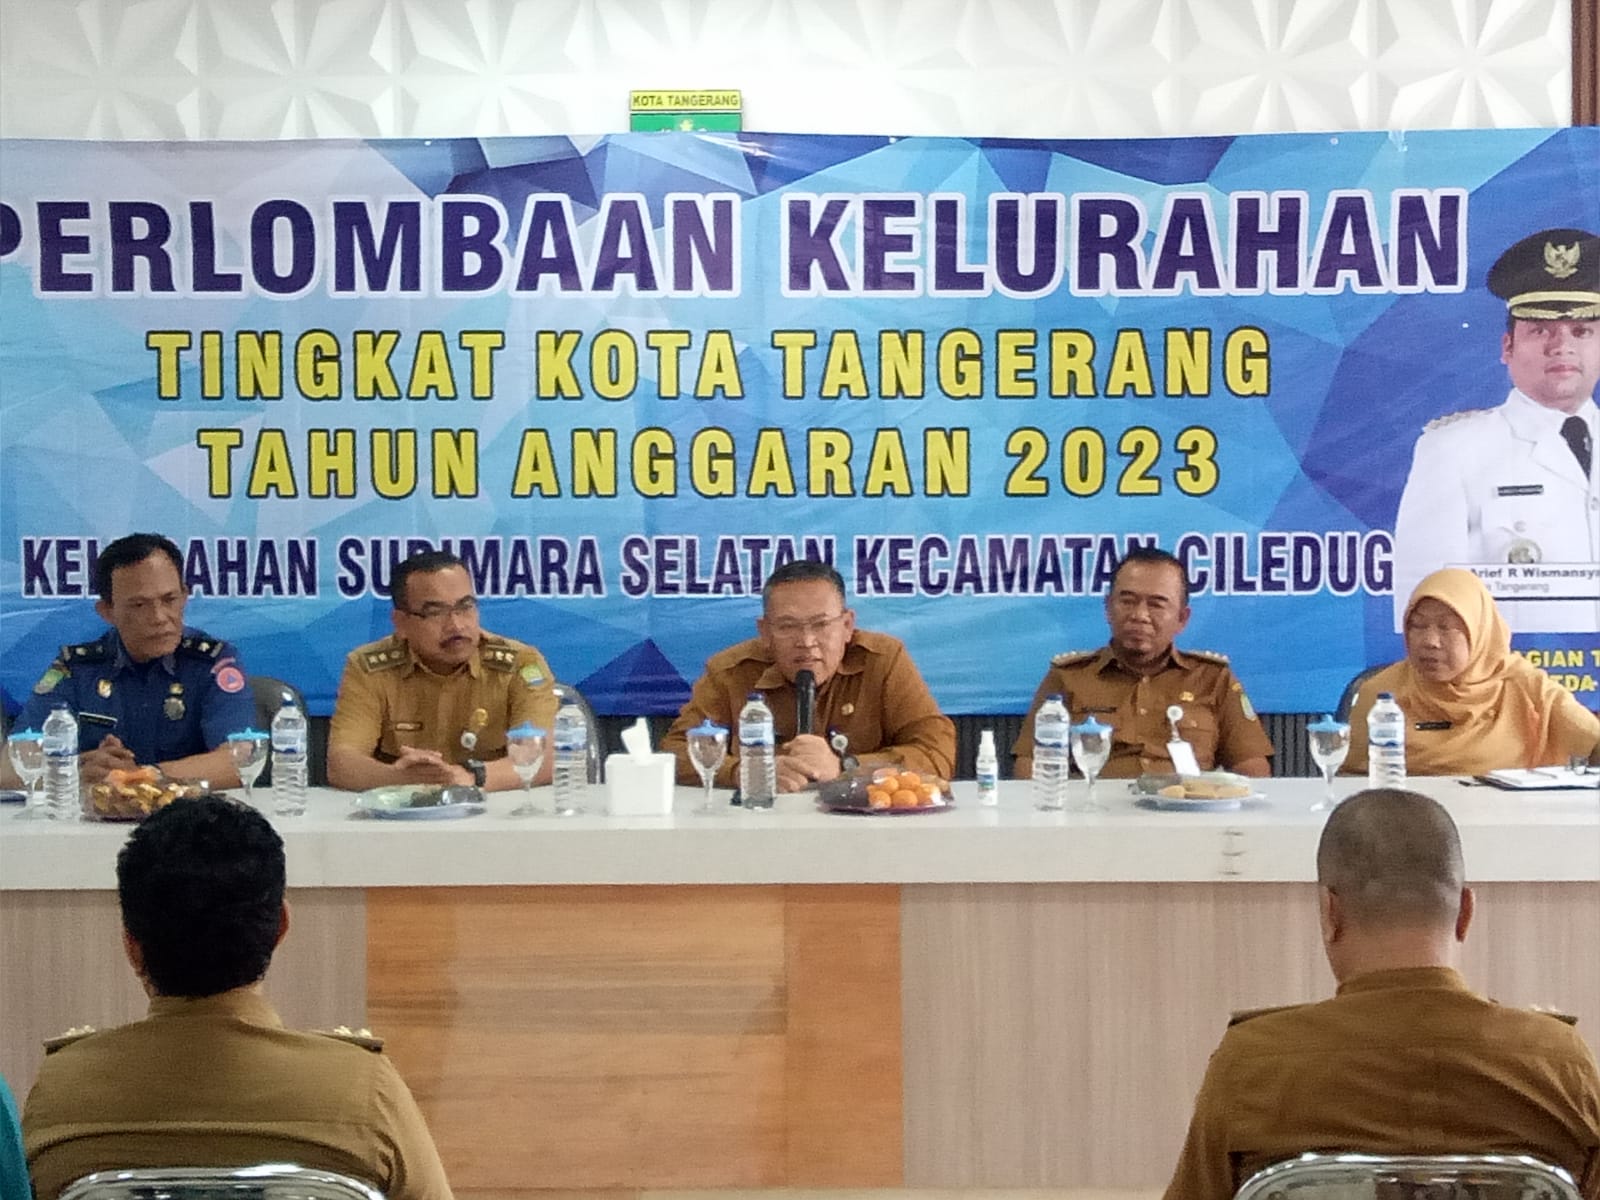 Seremonial Perlombaan Kelurahan Tingkat Kota Tangerang Tahun Anggaran 2023 .